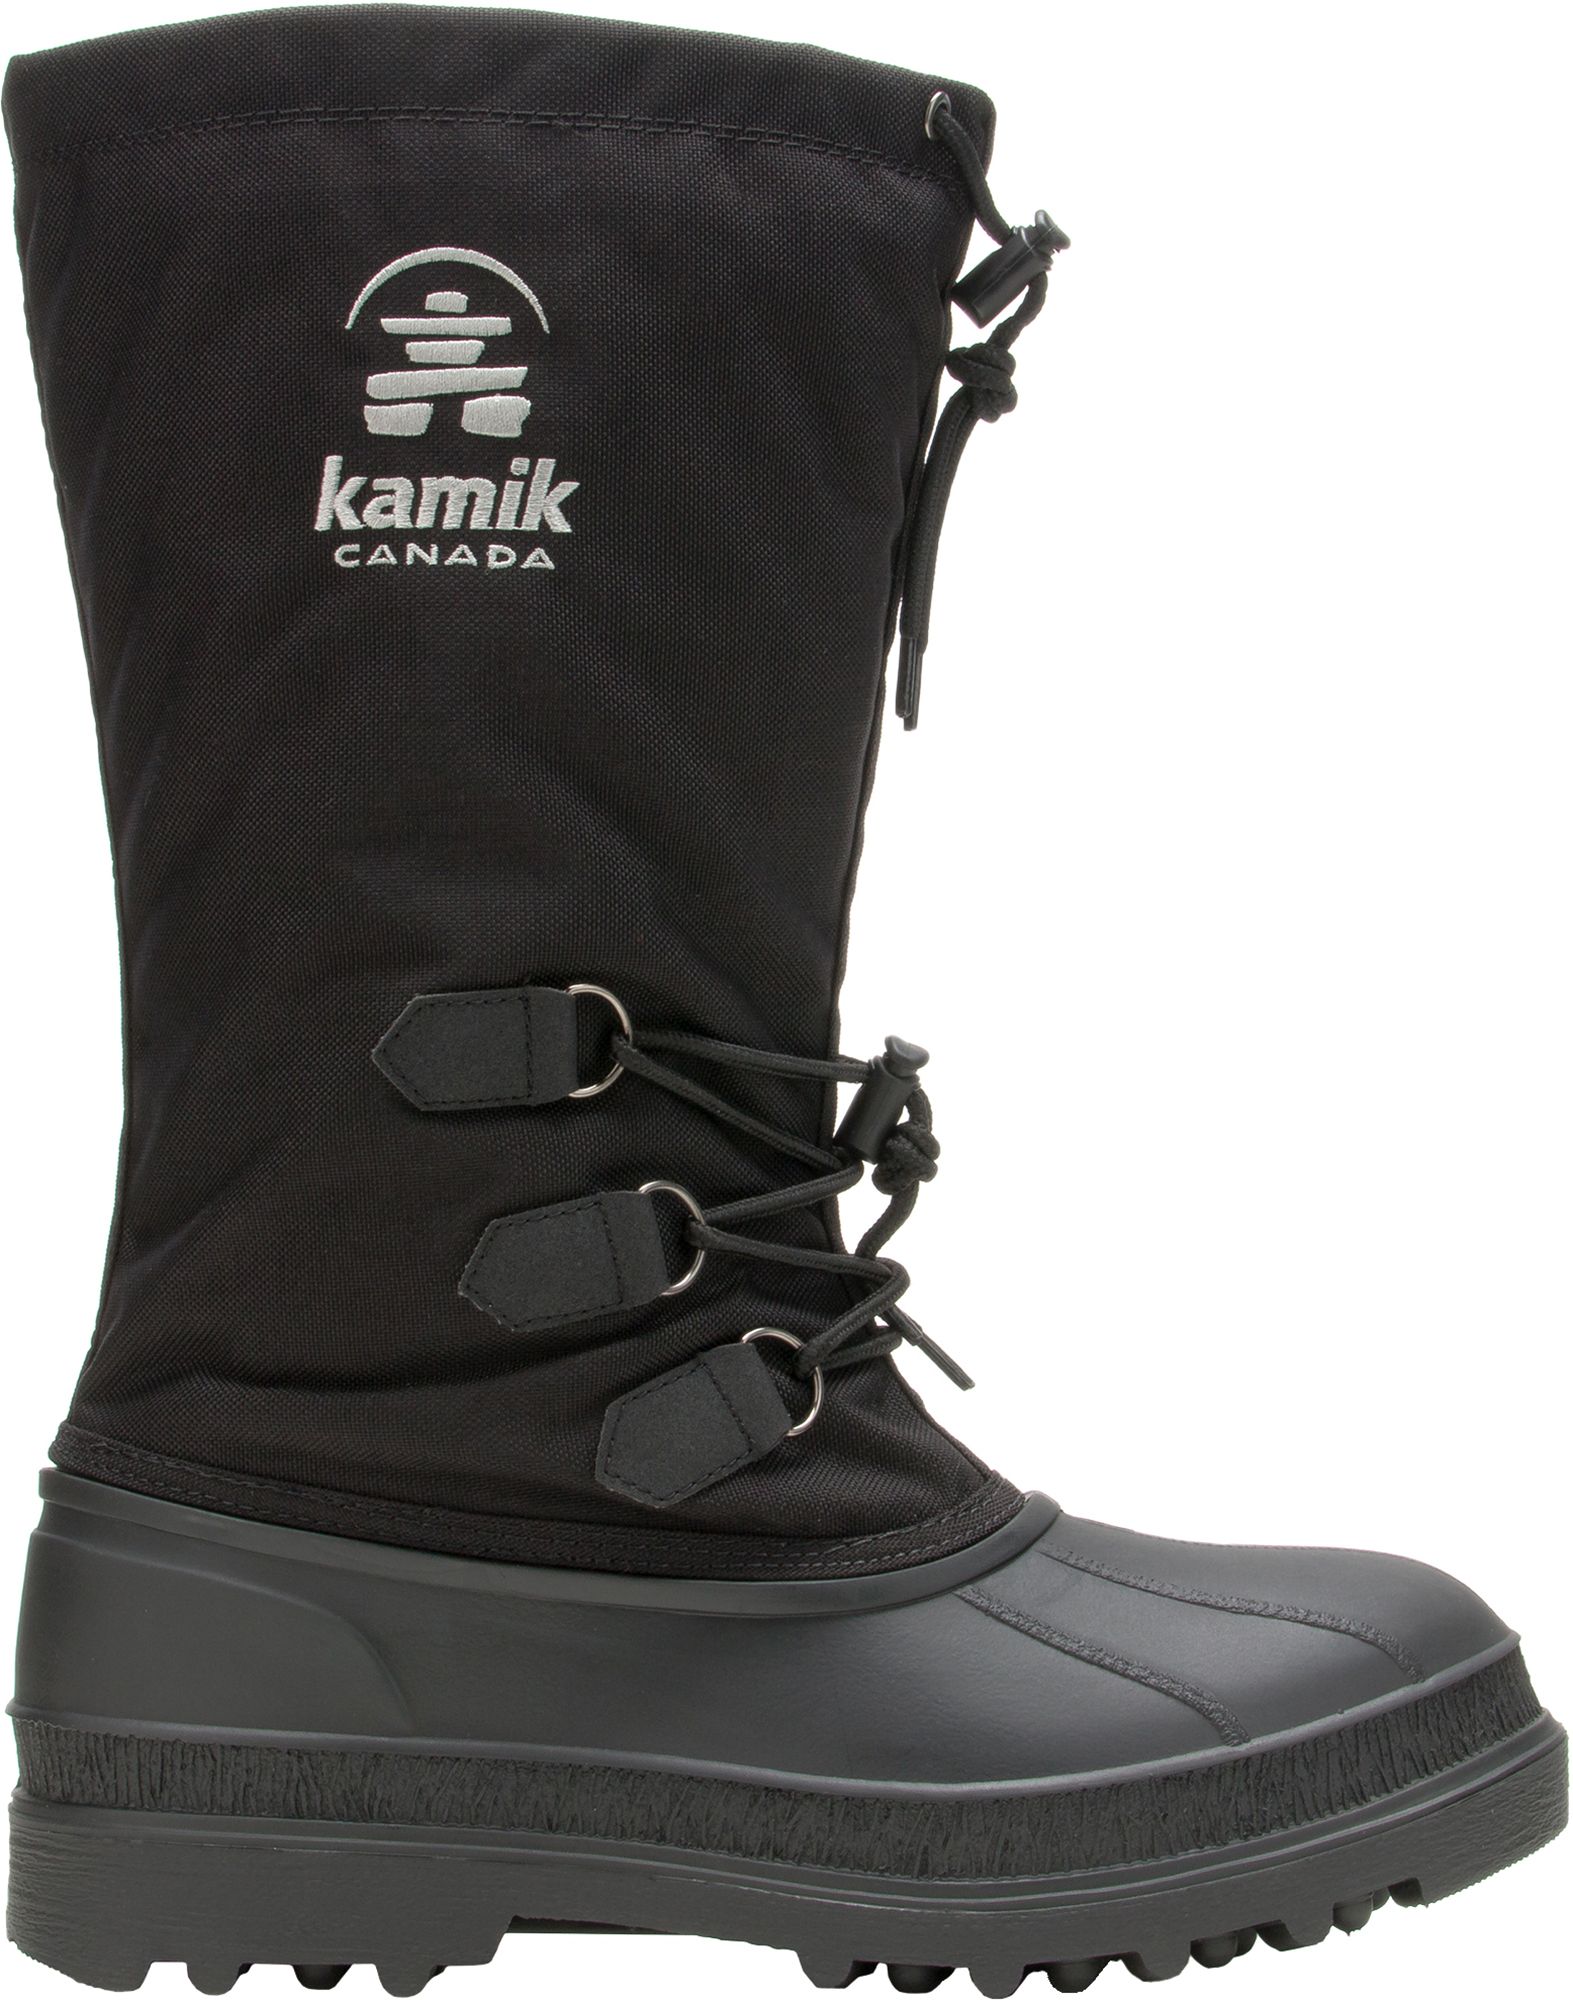 kamik men's snow boots